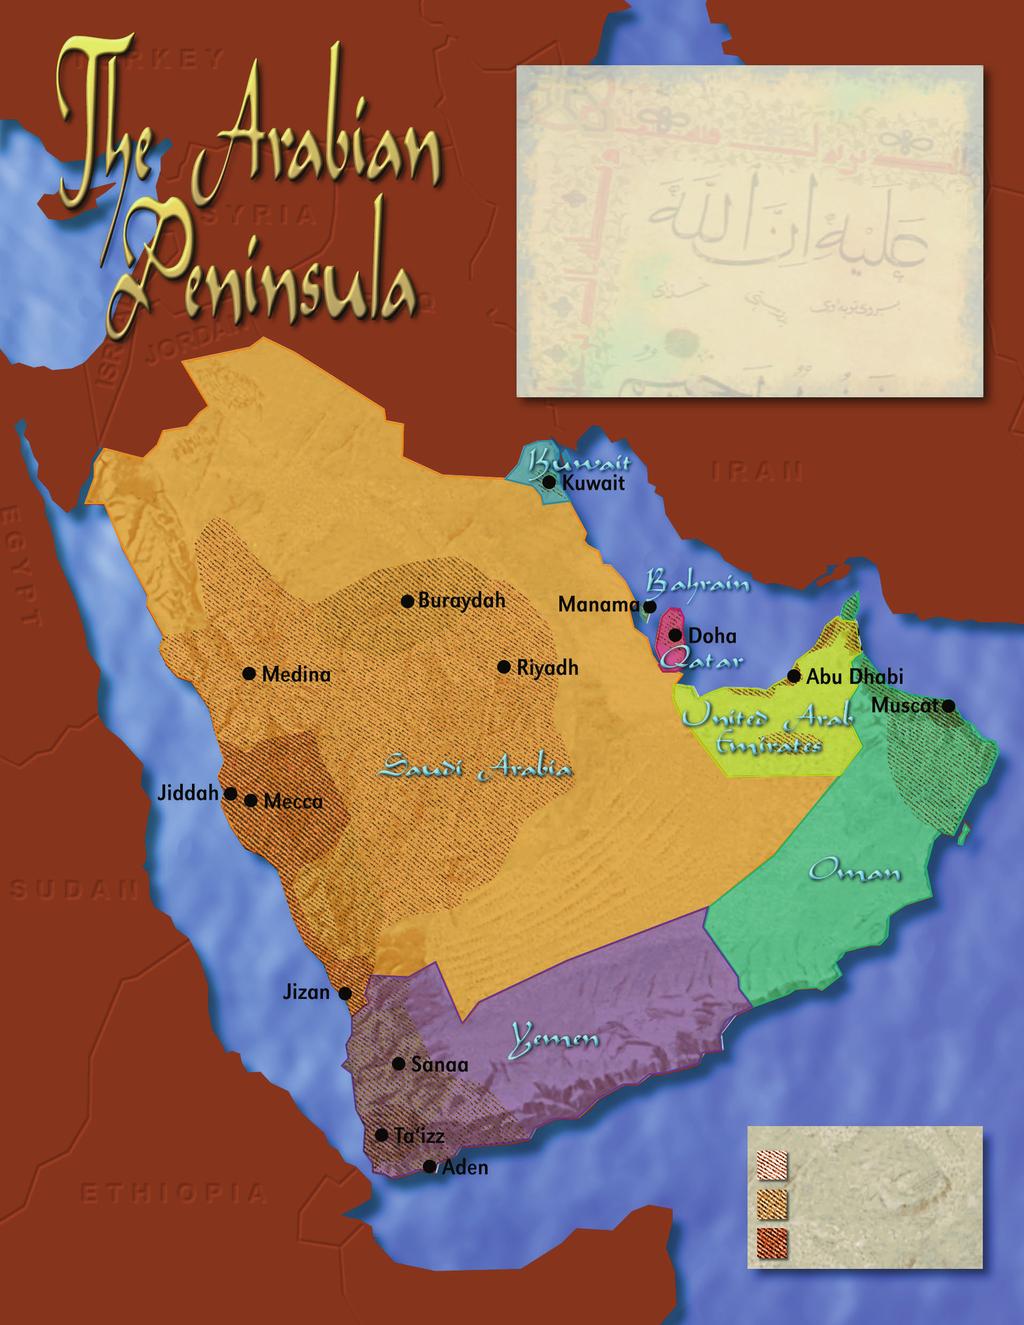 THE ARABIAN PENINSULA is a land of stark contrasts. Vast oil reserves lie hidden under equally vast uninhabited deserts.